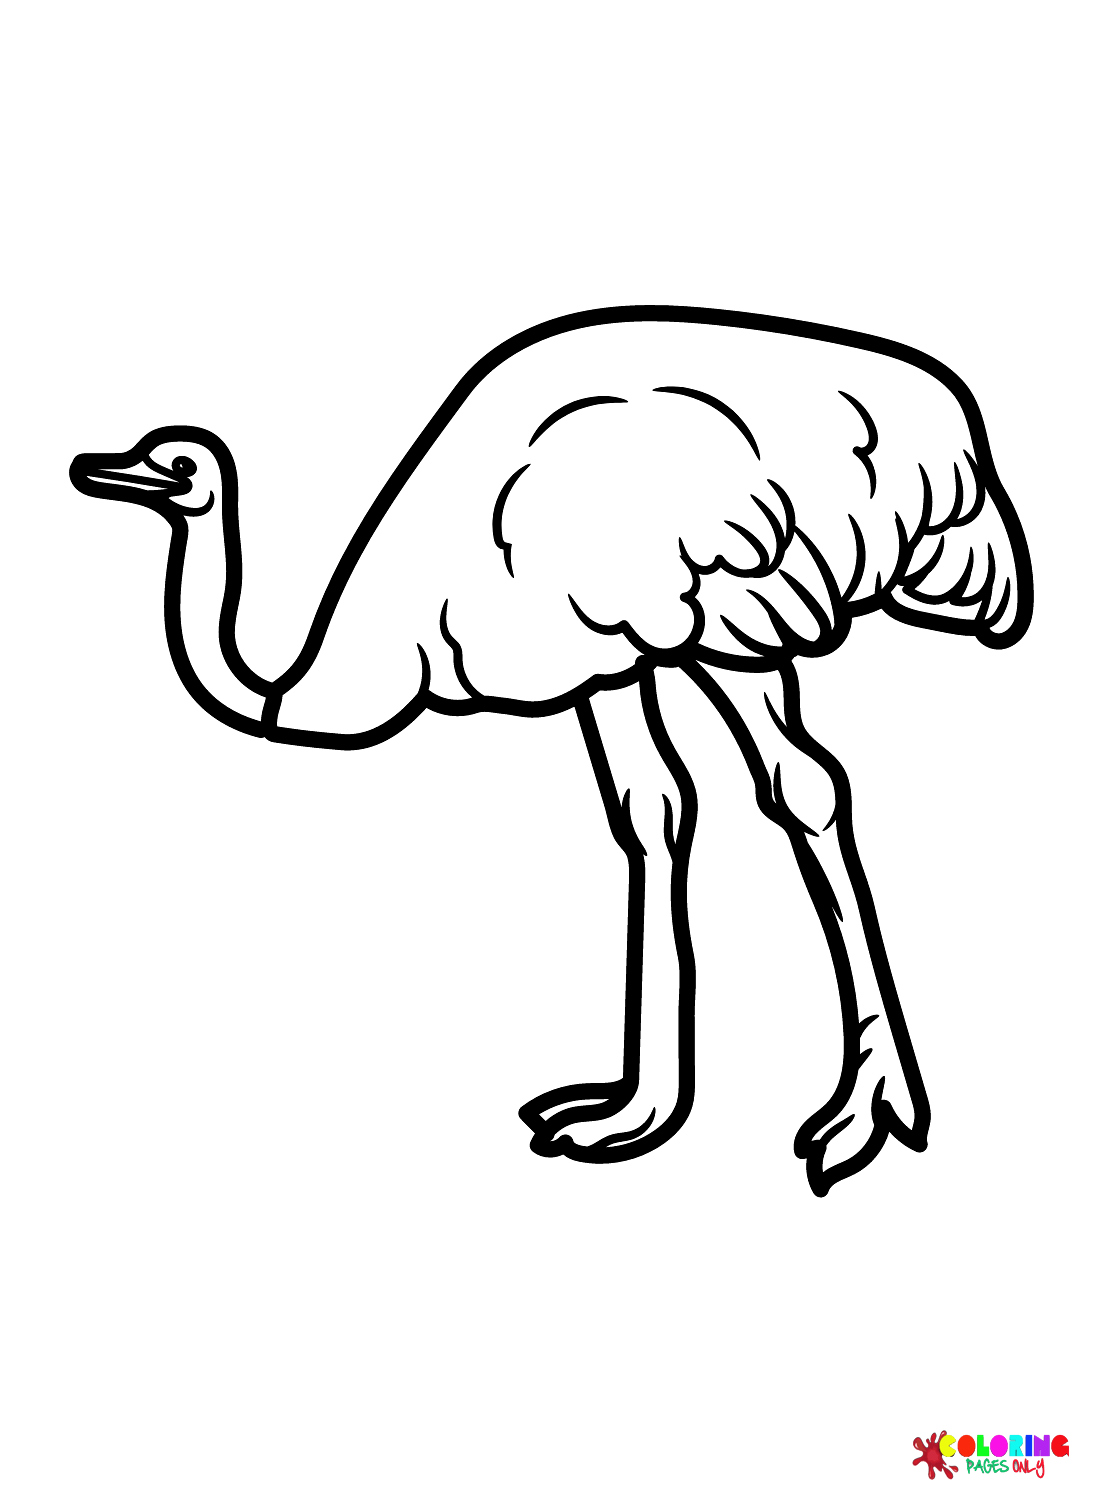 Images Emu from Emu